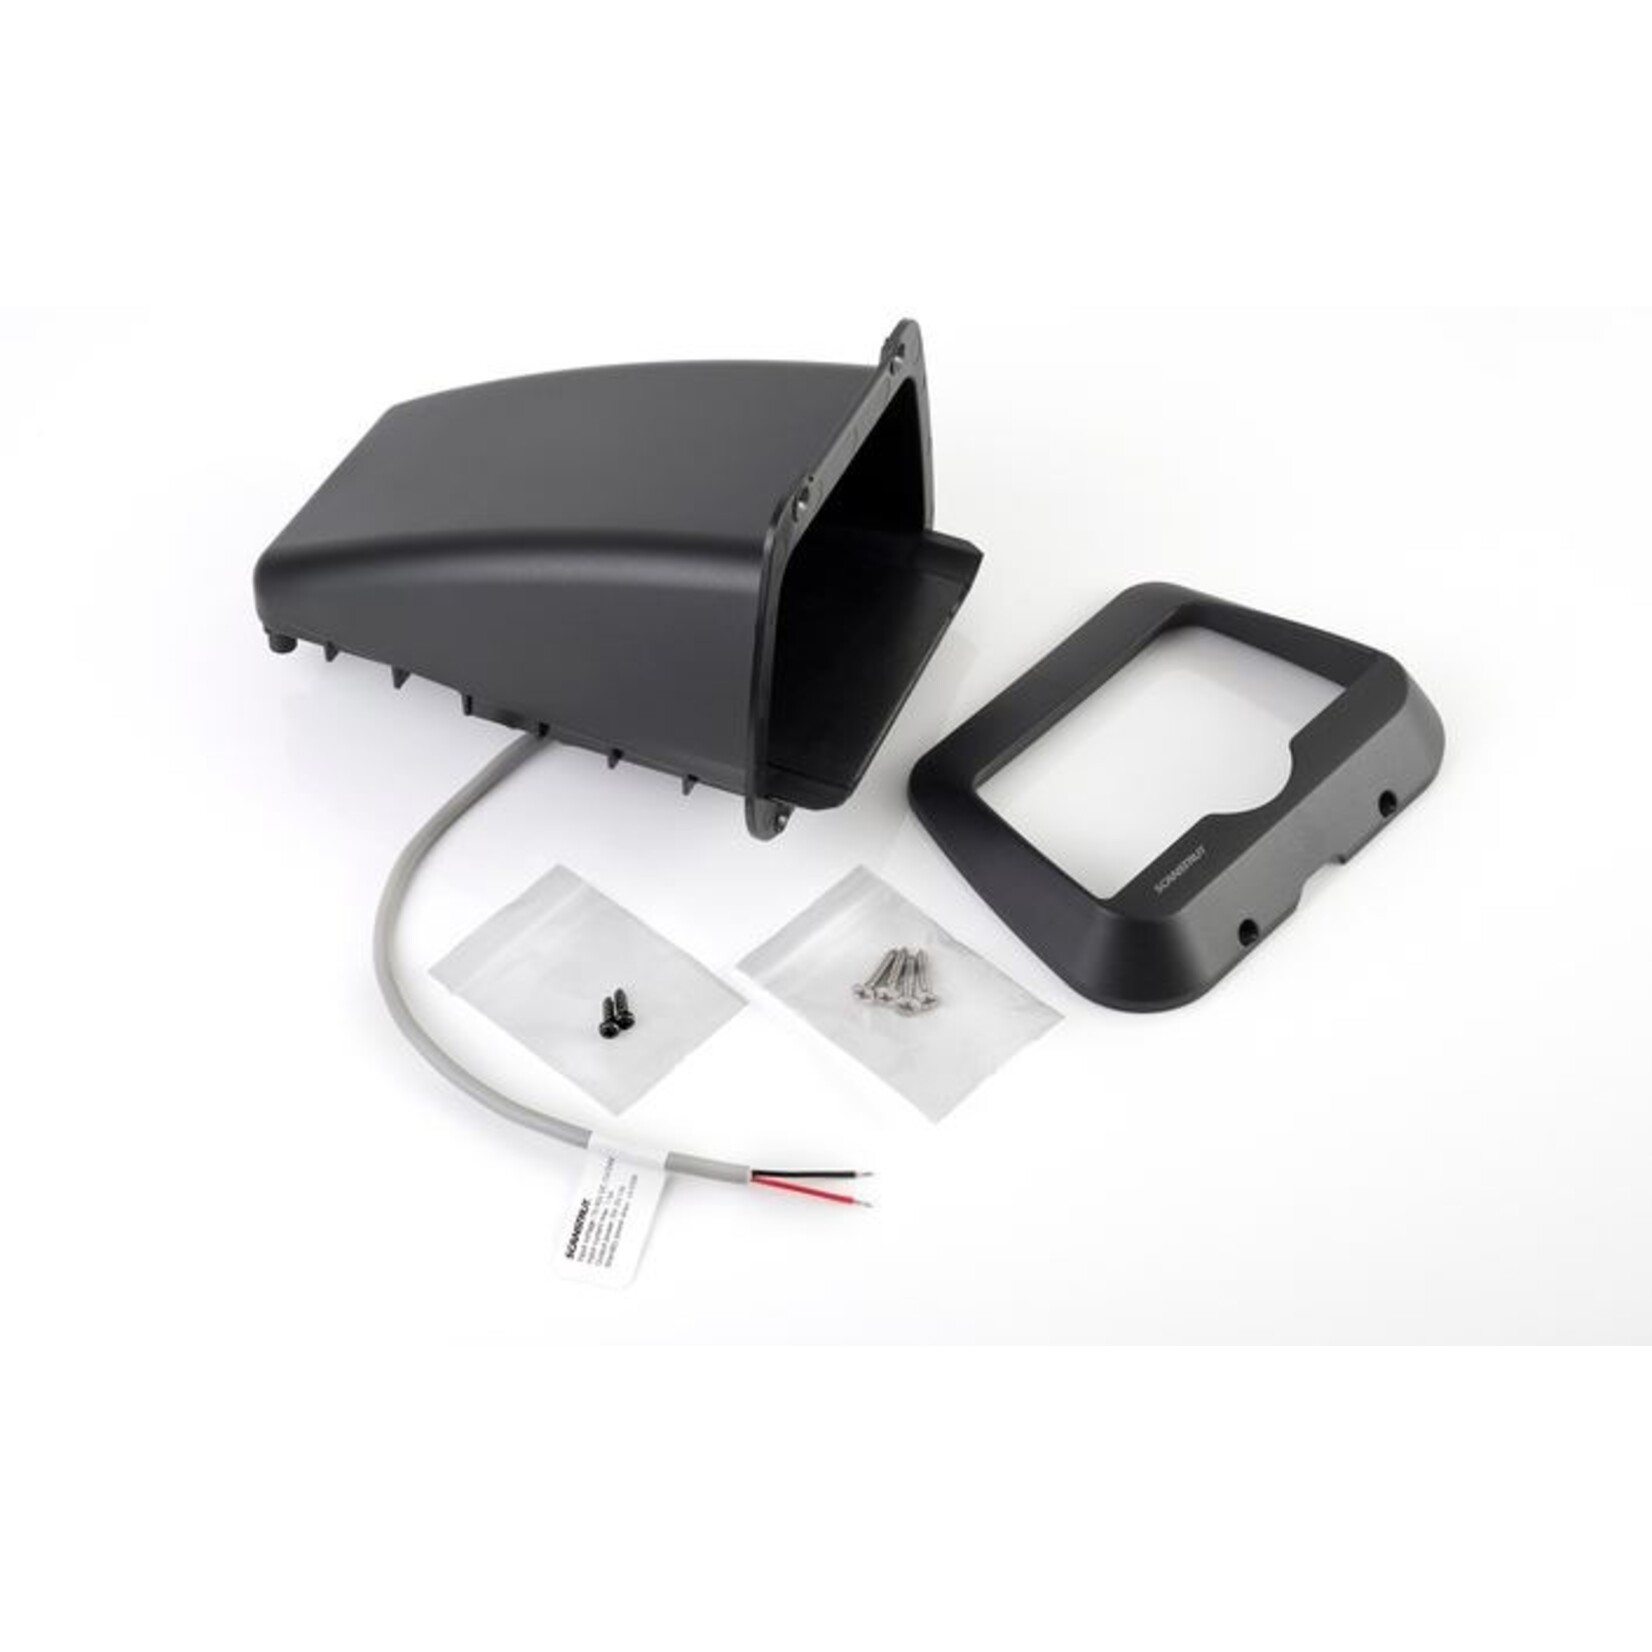 Scanstrut ROKK Wireless - Nest. Waterproof wireless charger 12V/24V